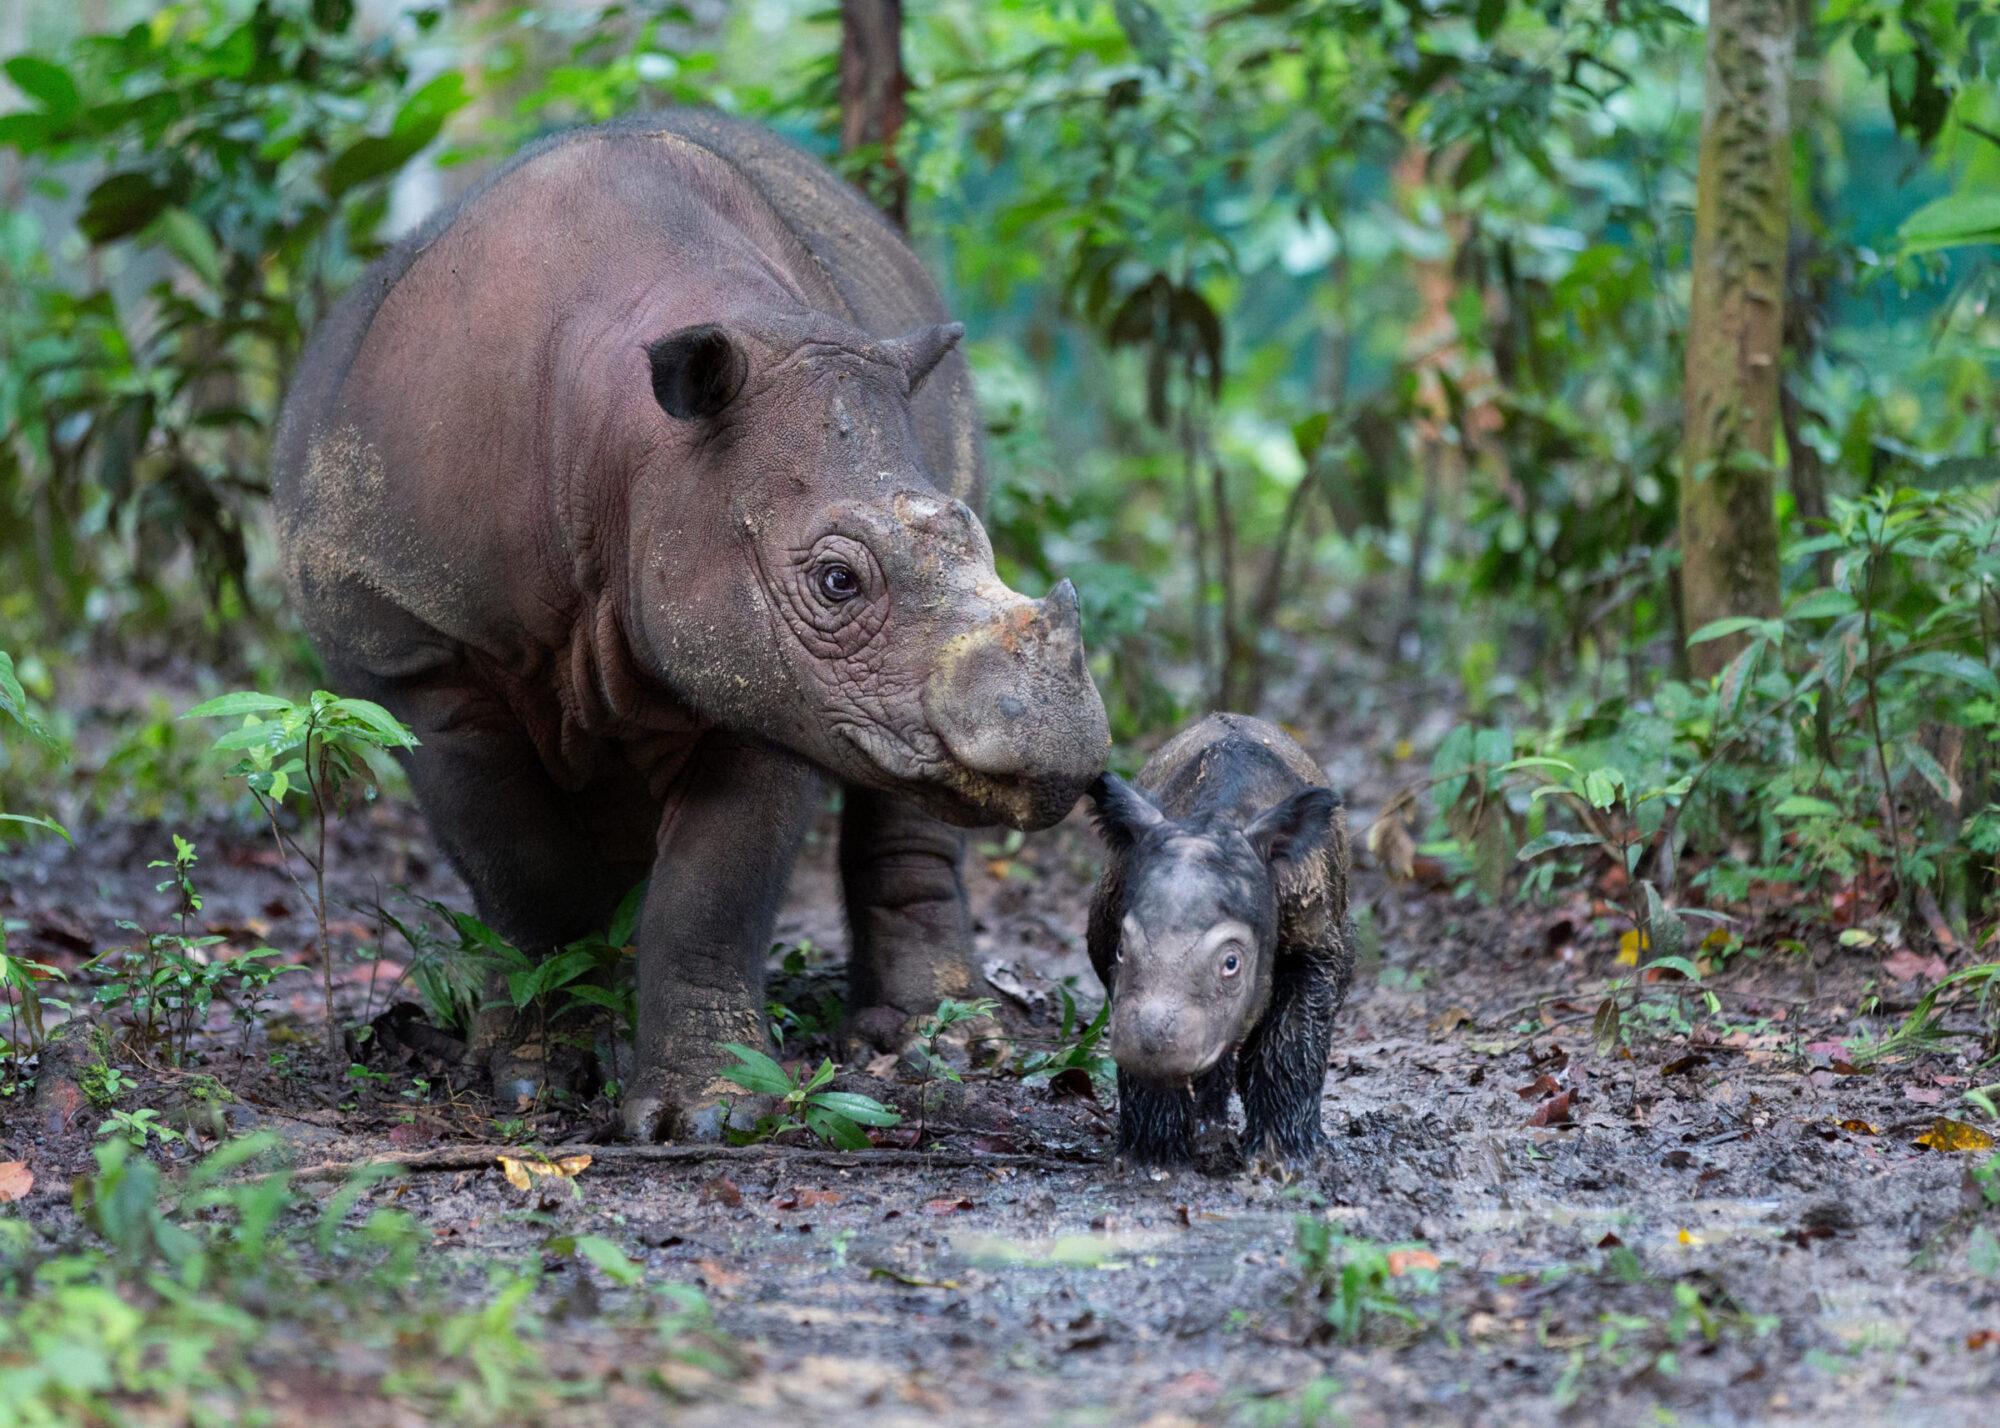 A Sumatran rhinoceros and its newborn calf